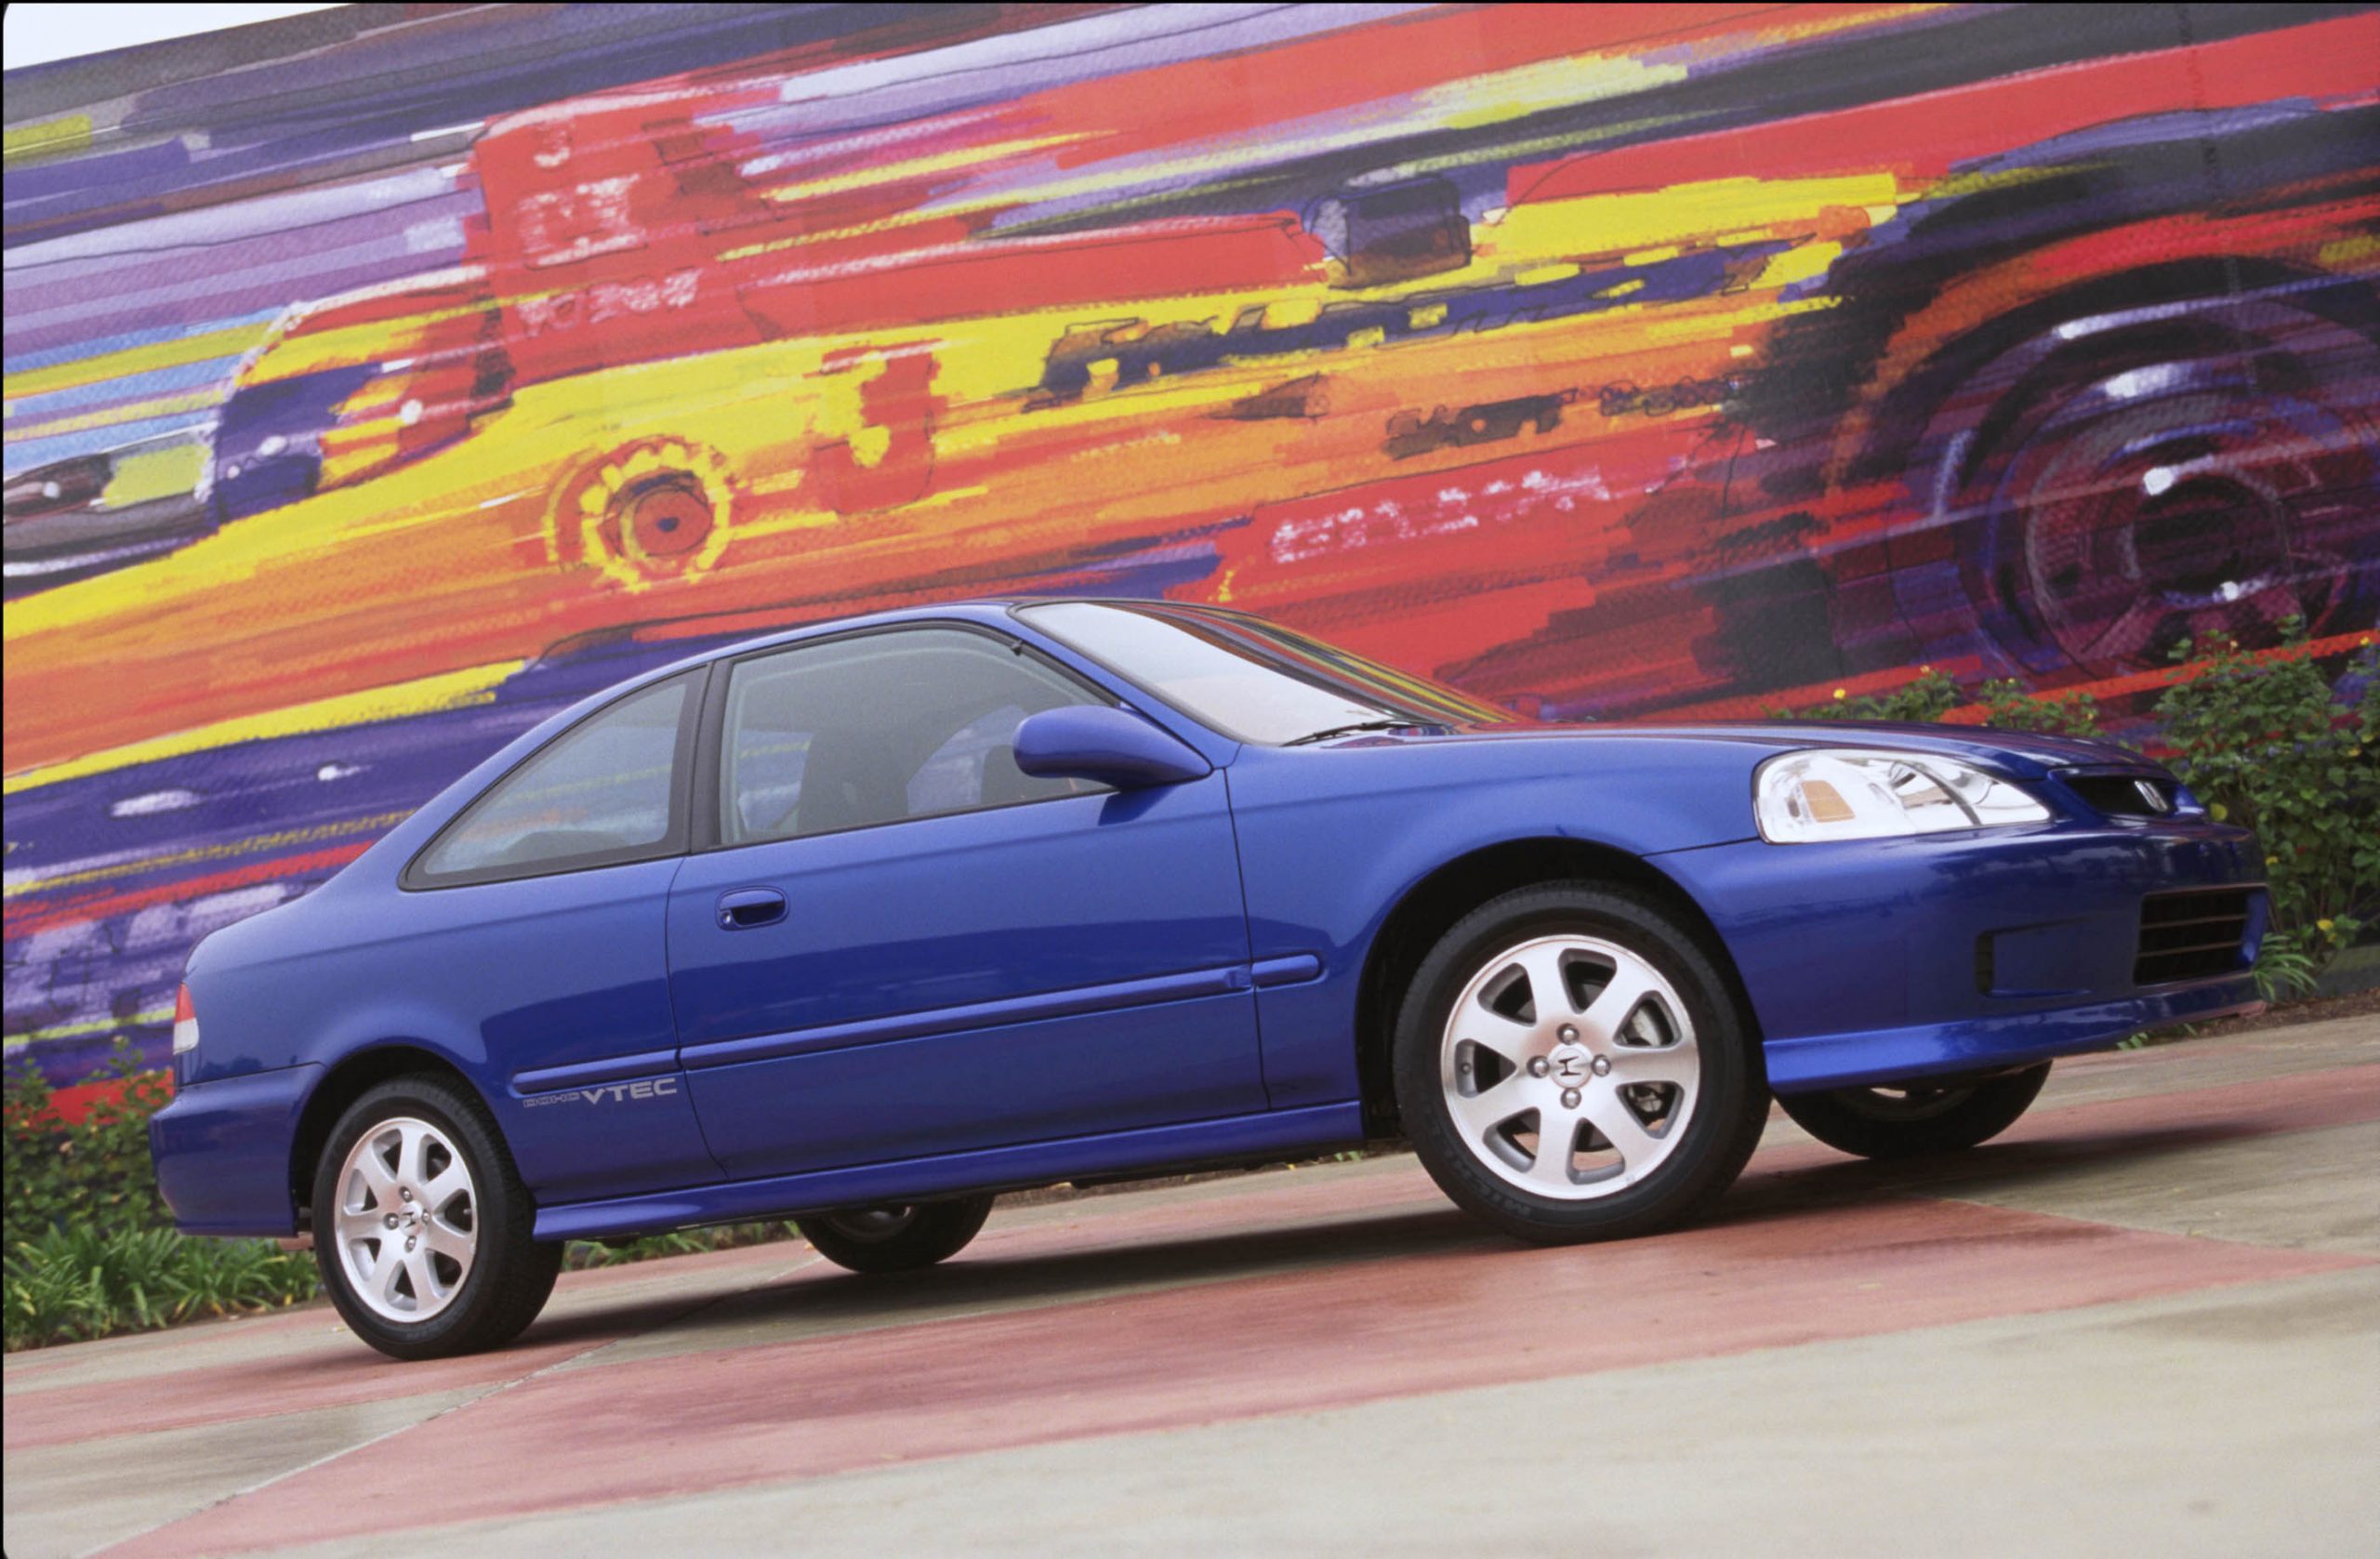 A blue EG series Civic Si shot in profile